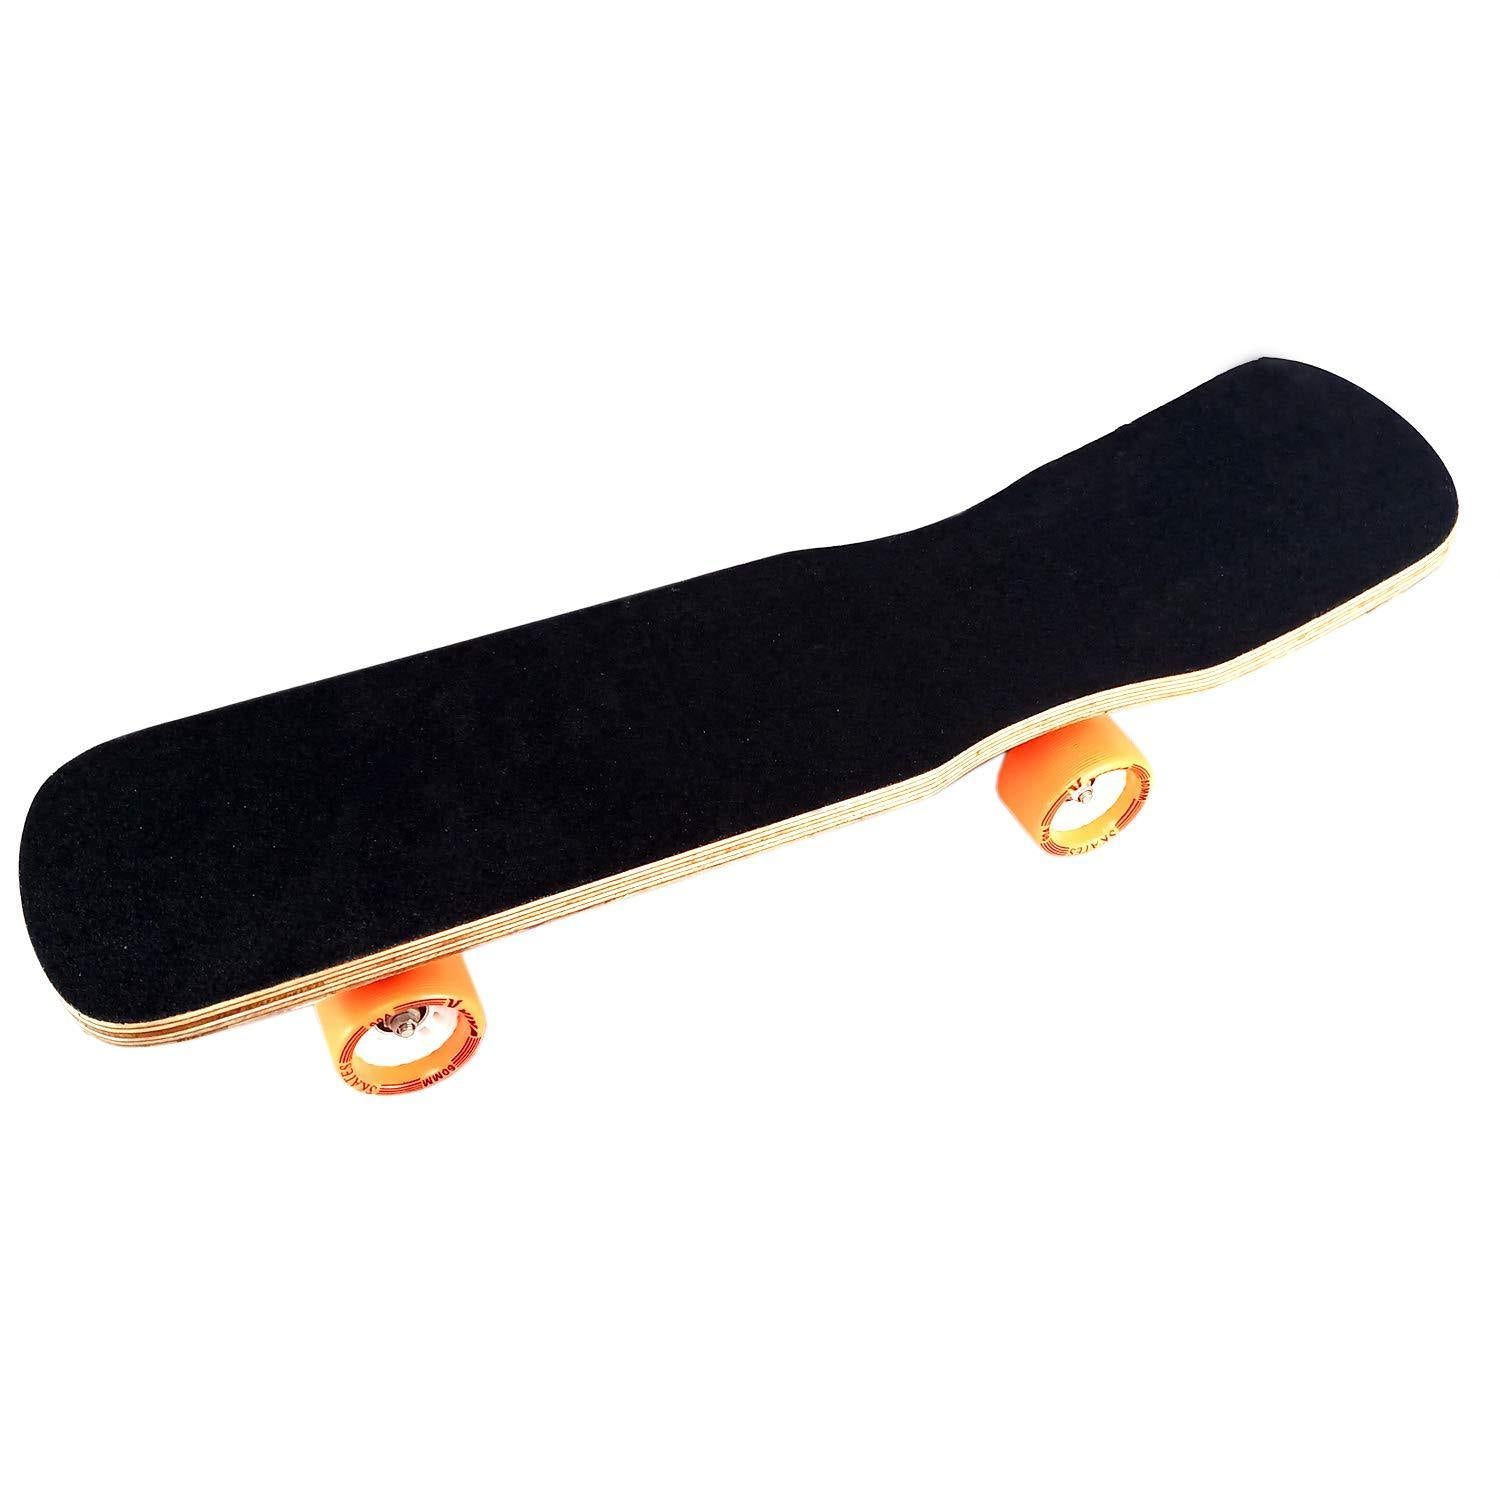 VIVA Wooden Skateboard With Anti Skid Surface - Junior - Best Price online Prokicksports.com